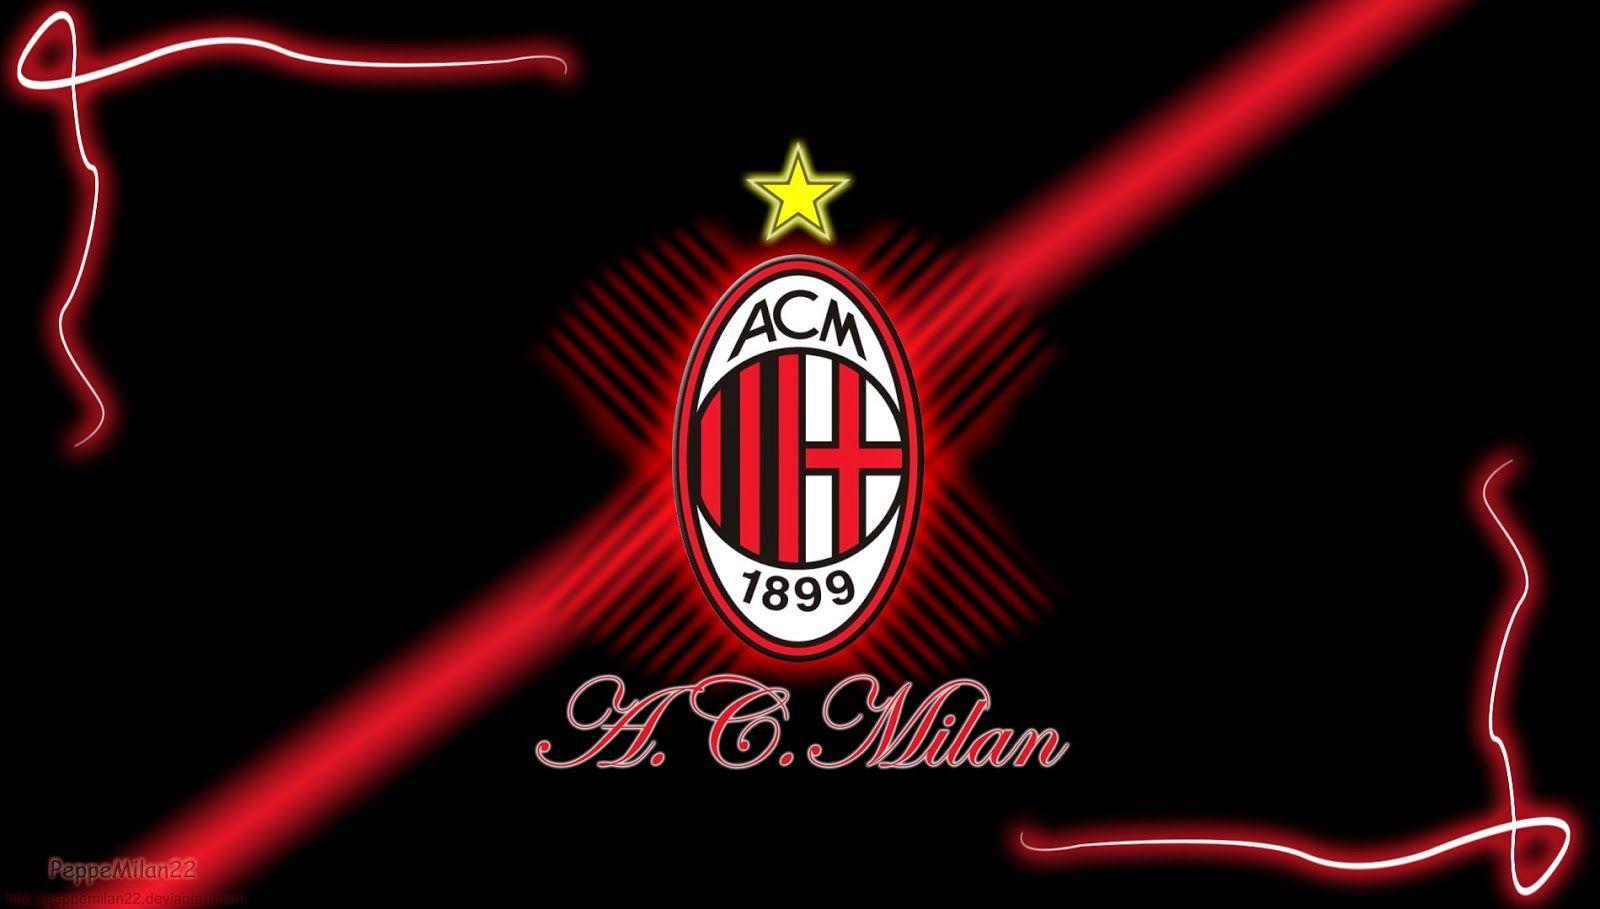 IDN FOOTBALLCLUB WALLPAPER: AC Milan Football Club Wallpapers